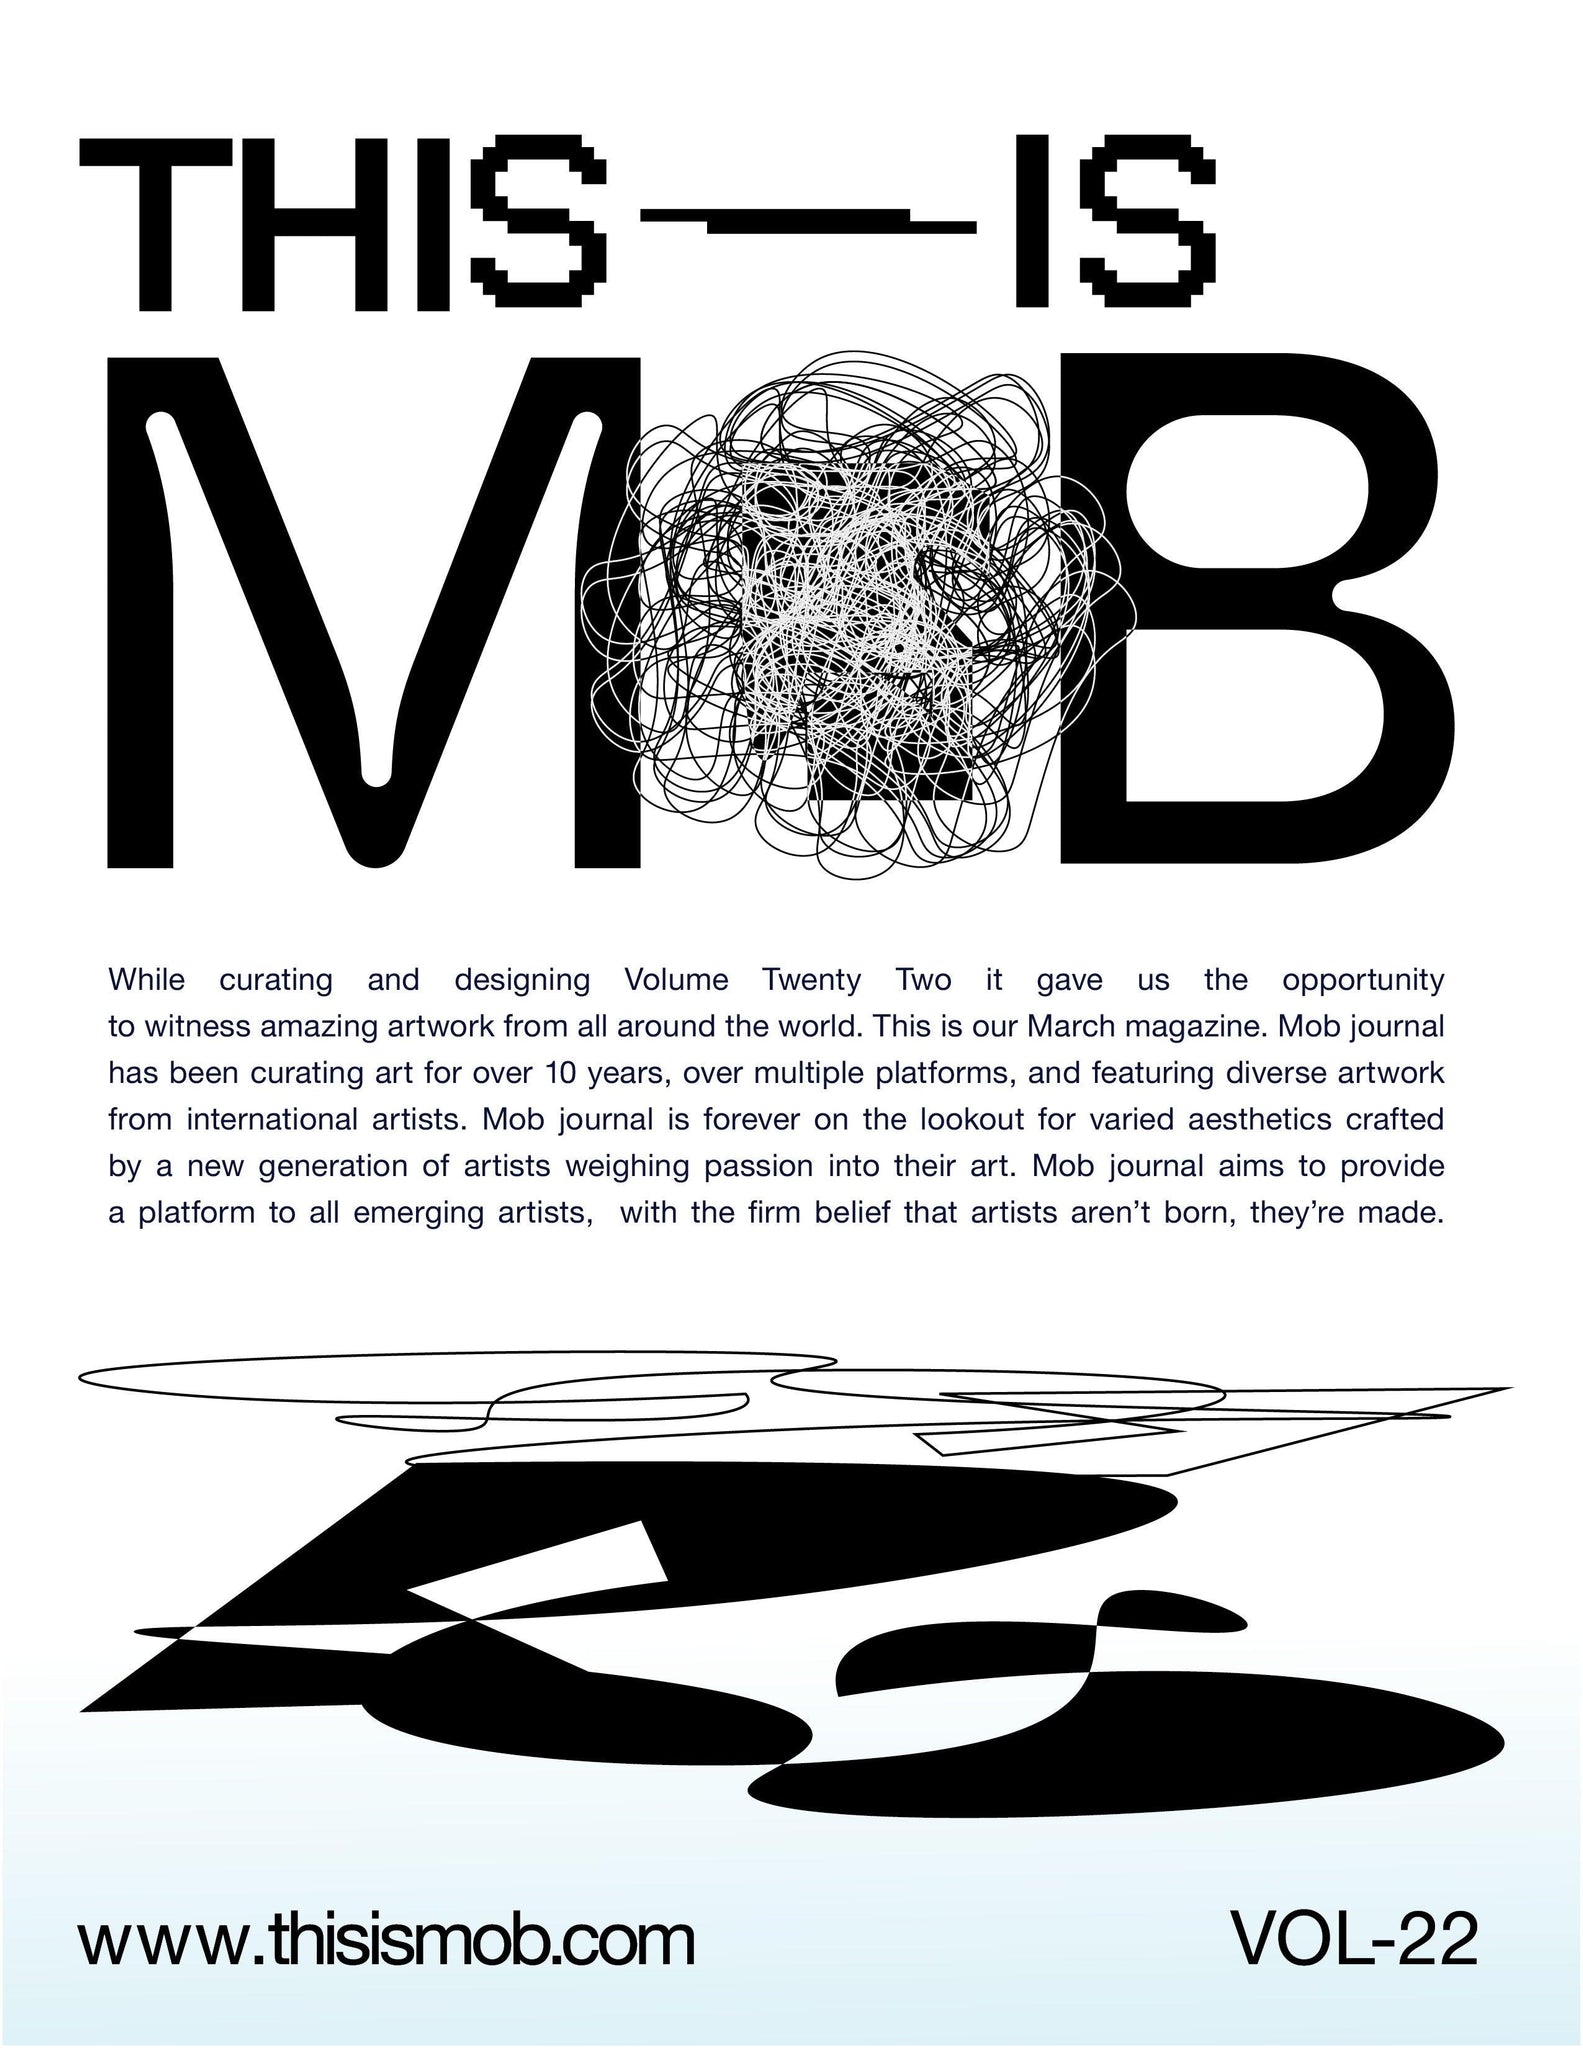 MOB JOURNAL | VOLUME TWENTY TWO | ISSUE #63 - Mob Journal